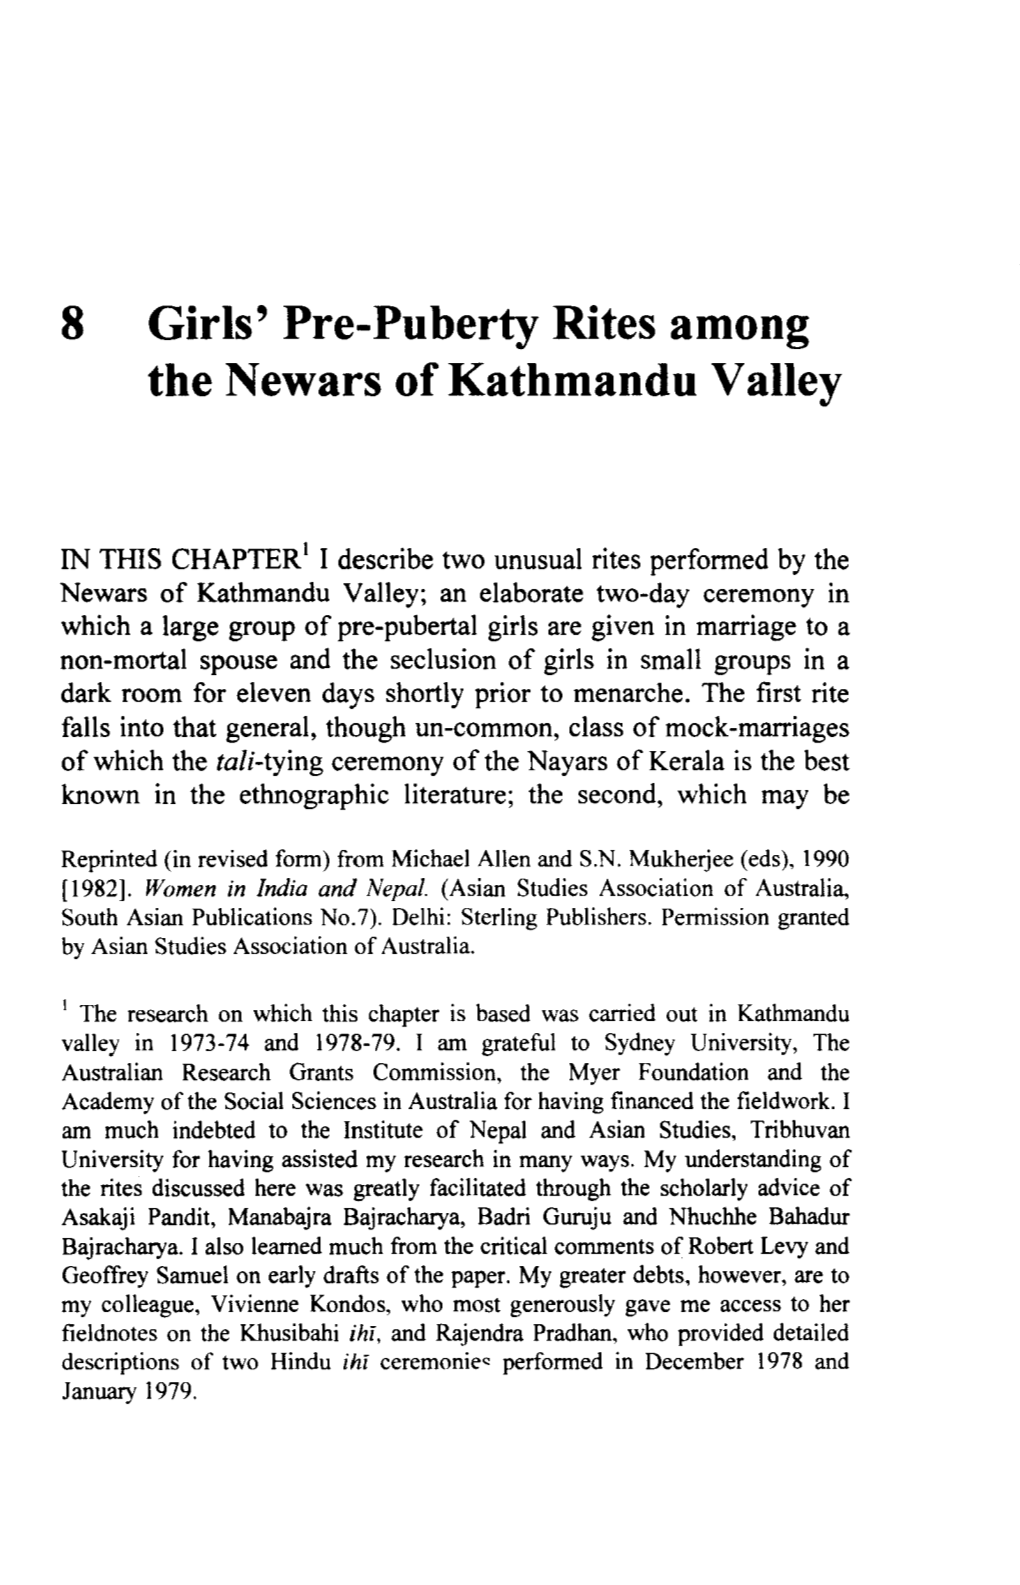 8 Girls' Pre-Puberty Rites Among the Newars of Kathmandu Valley